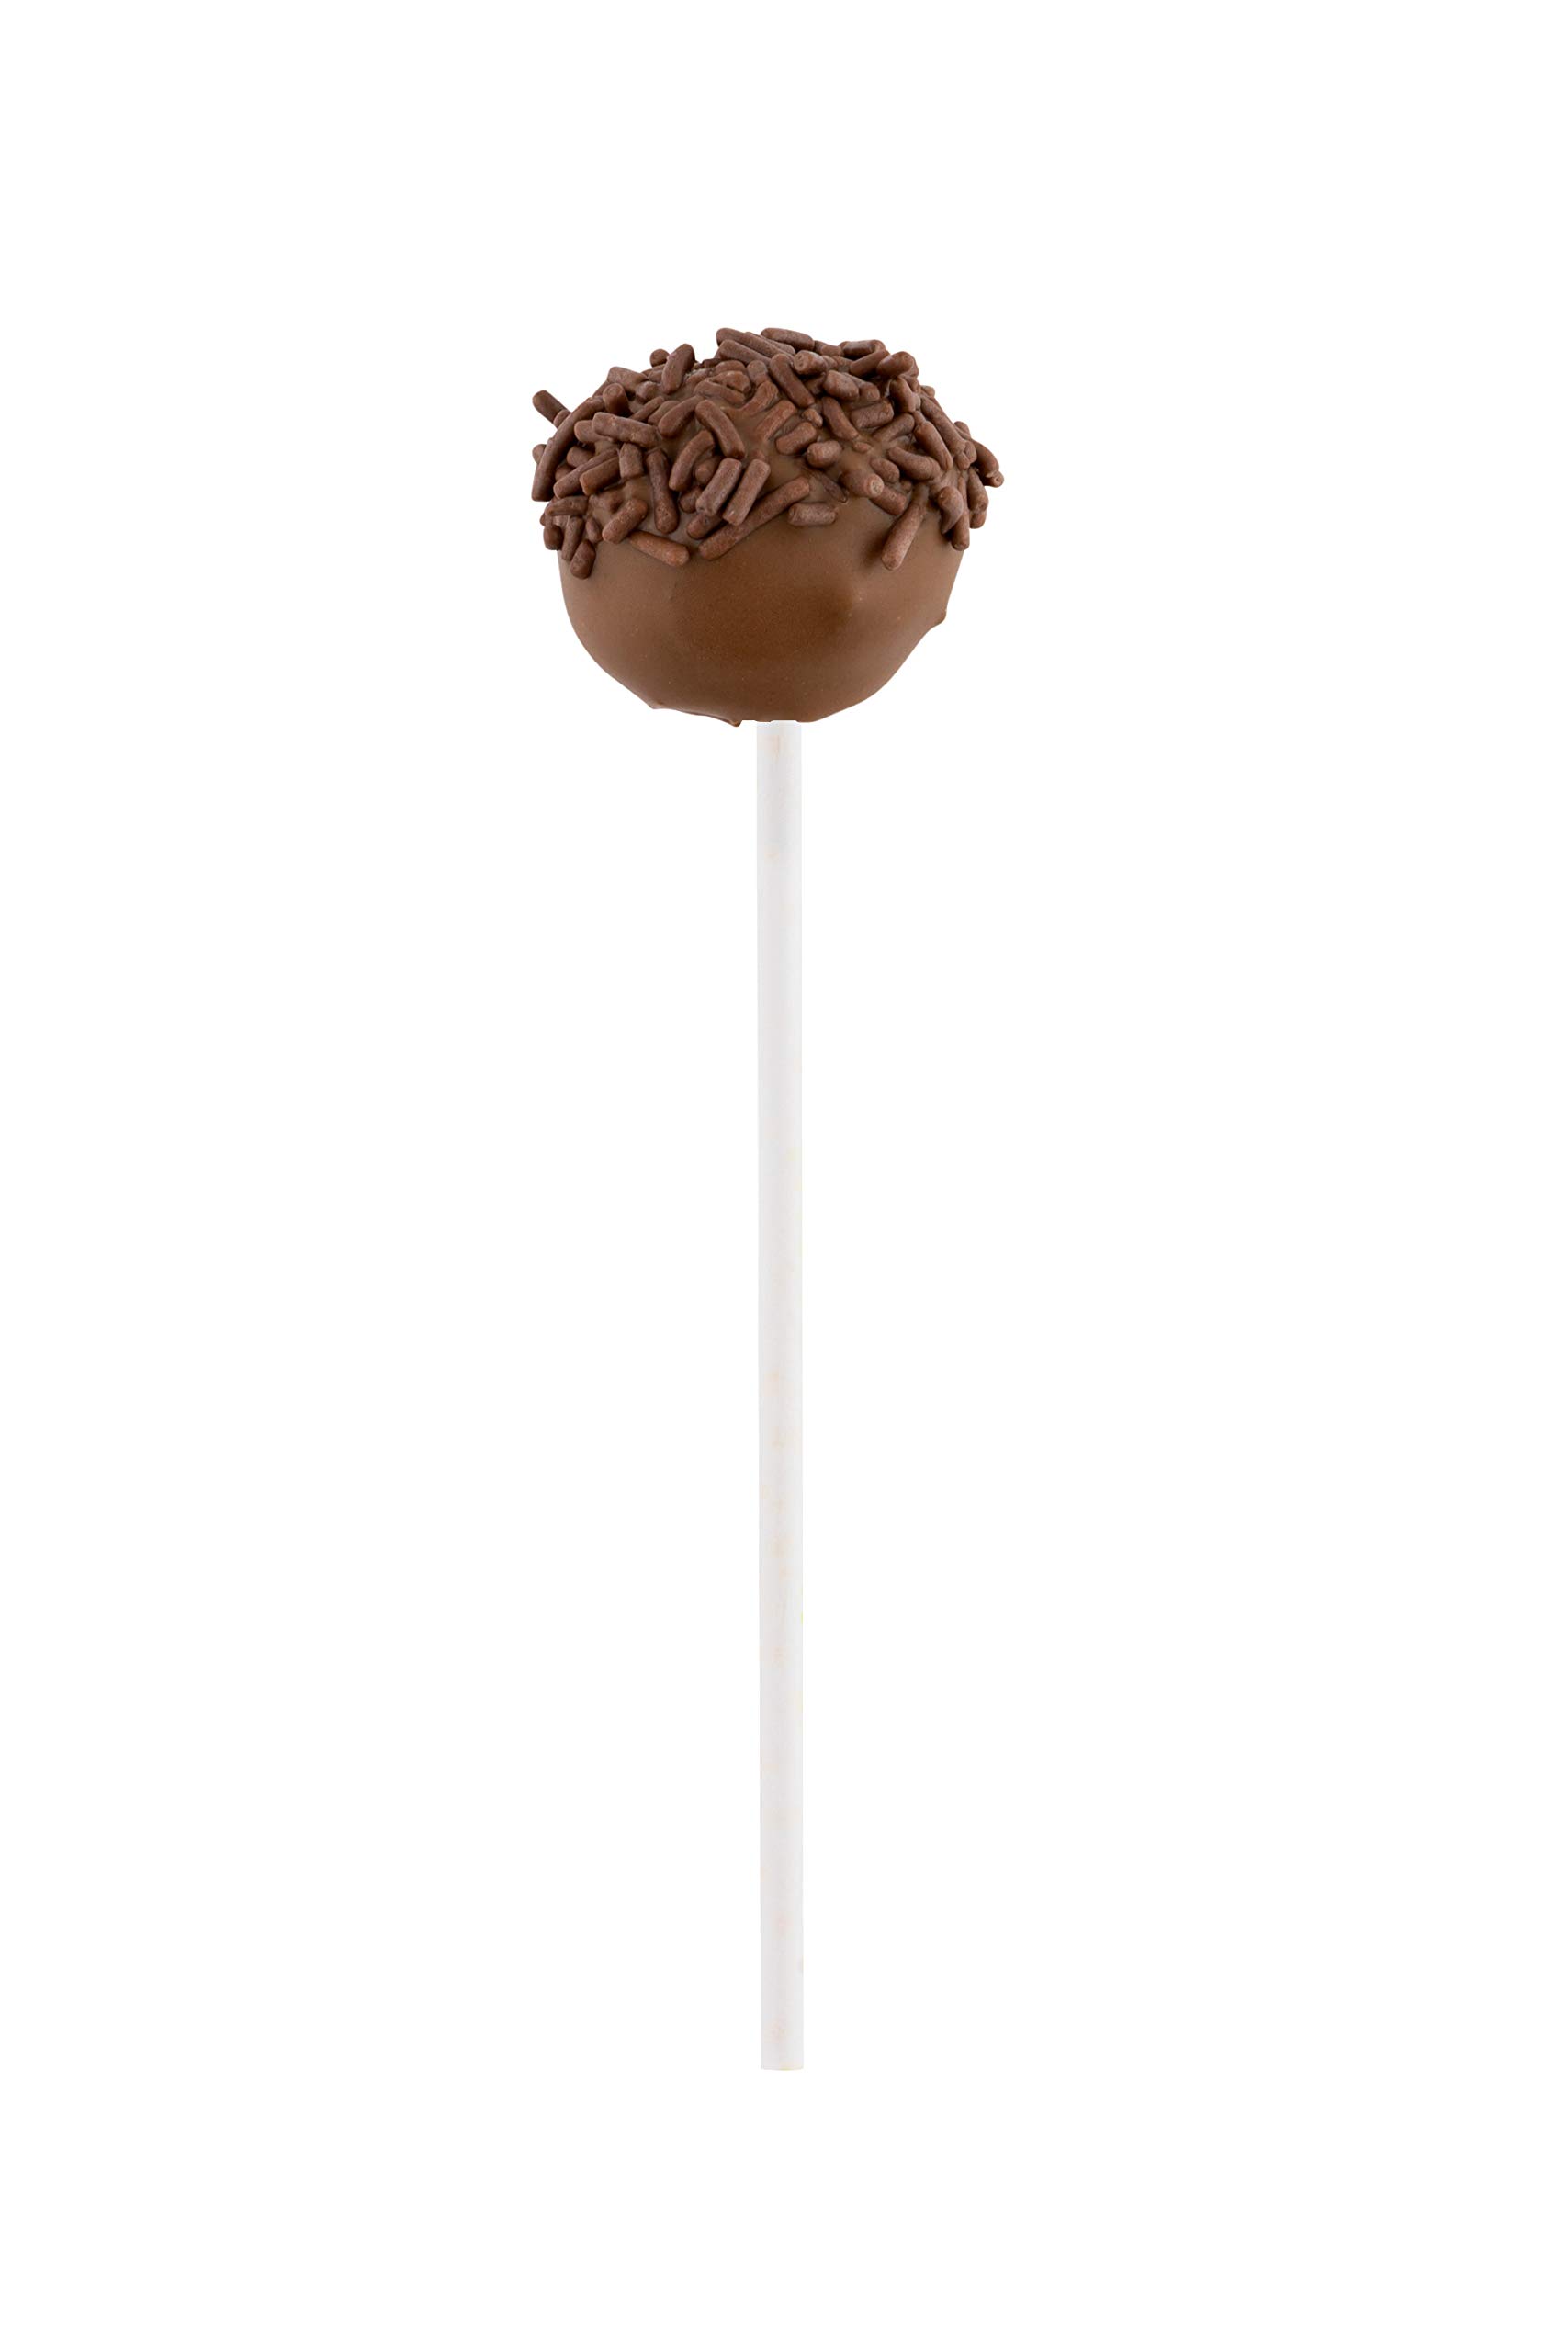 5.9 Inch Cake Pop Sticks, 25 Durable Lollipop Sticks - Sturdy, Multipurpose, White Paper Colored Cake Pop Sticks, Food Grade, For Desserts Or Crafts - Restaurantware